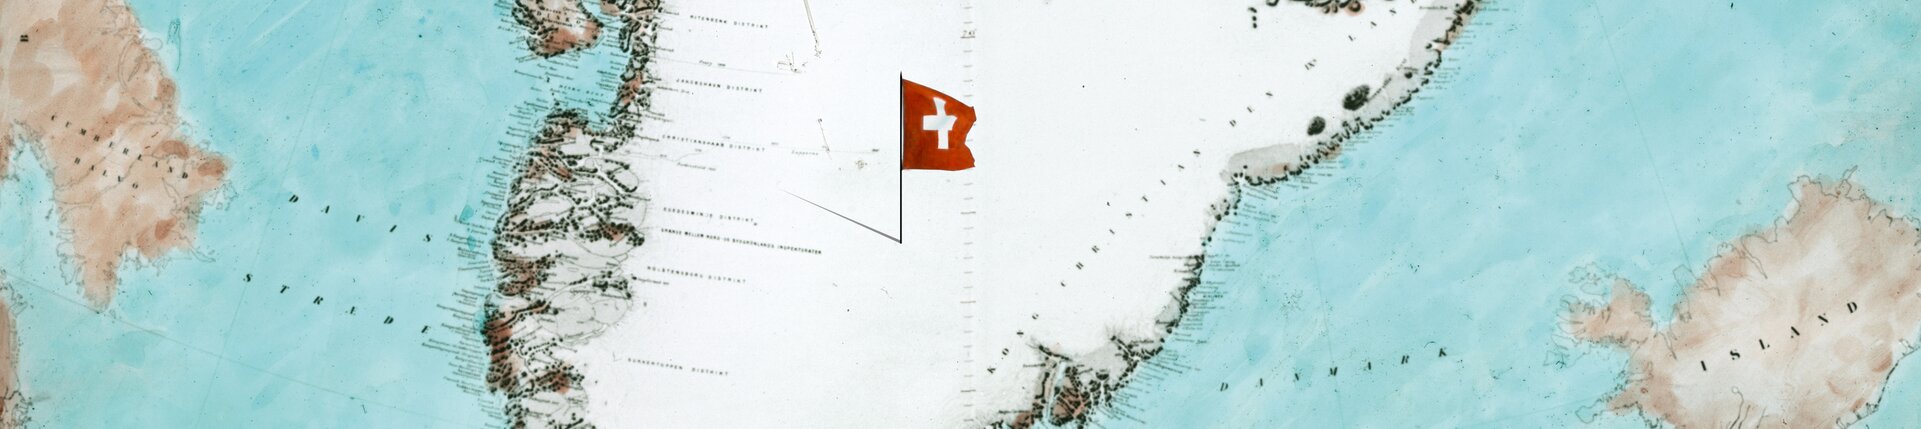 L'immagine chiave della mostra "Groenlandia 1912" è una mappa storica della Groenlandia con una piccola bandiera svizzera. | © Keyvisual der Ausstellung "Grönland 1912" - zu sehen eine alte Grönlandkare mit Schweizerflagge